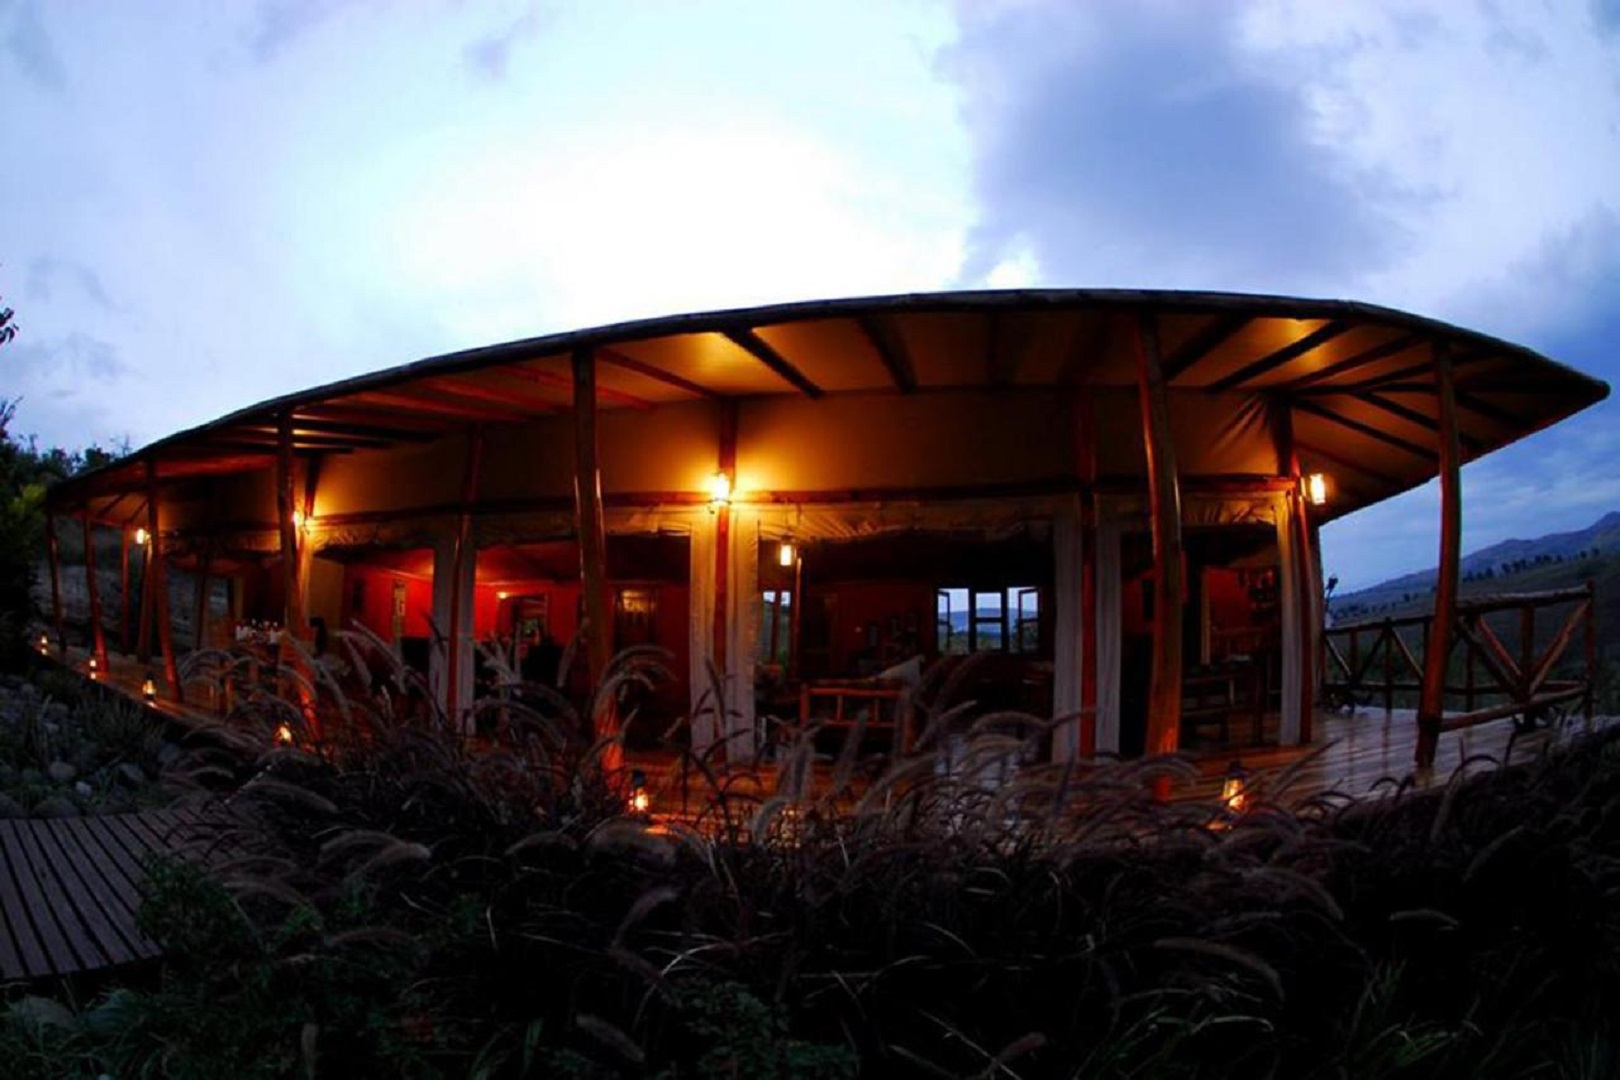 Night view of Marafiki Safari Lodge, Queen Elizabeth National Park